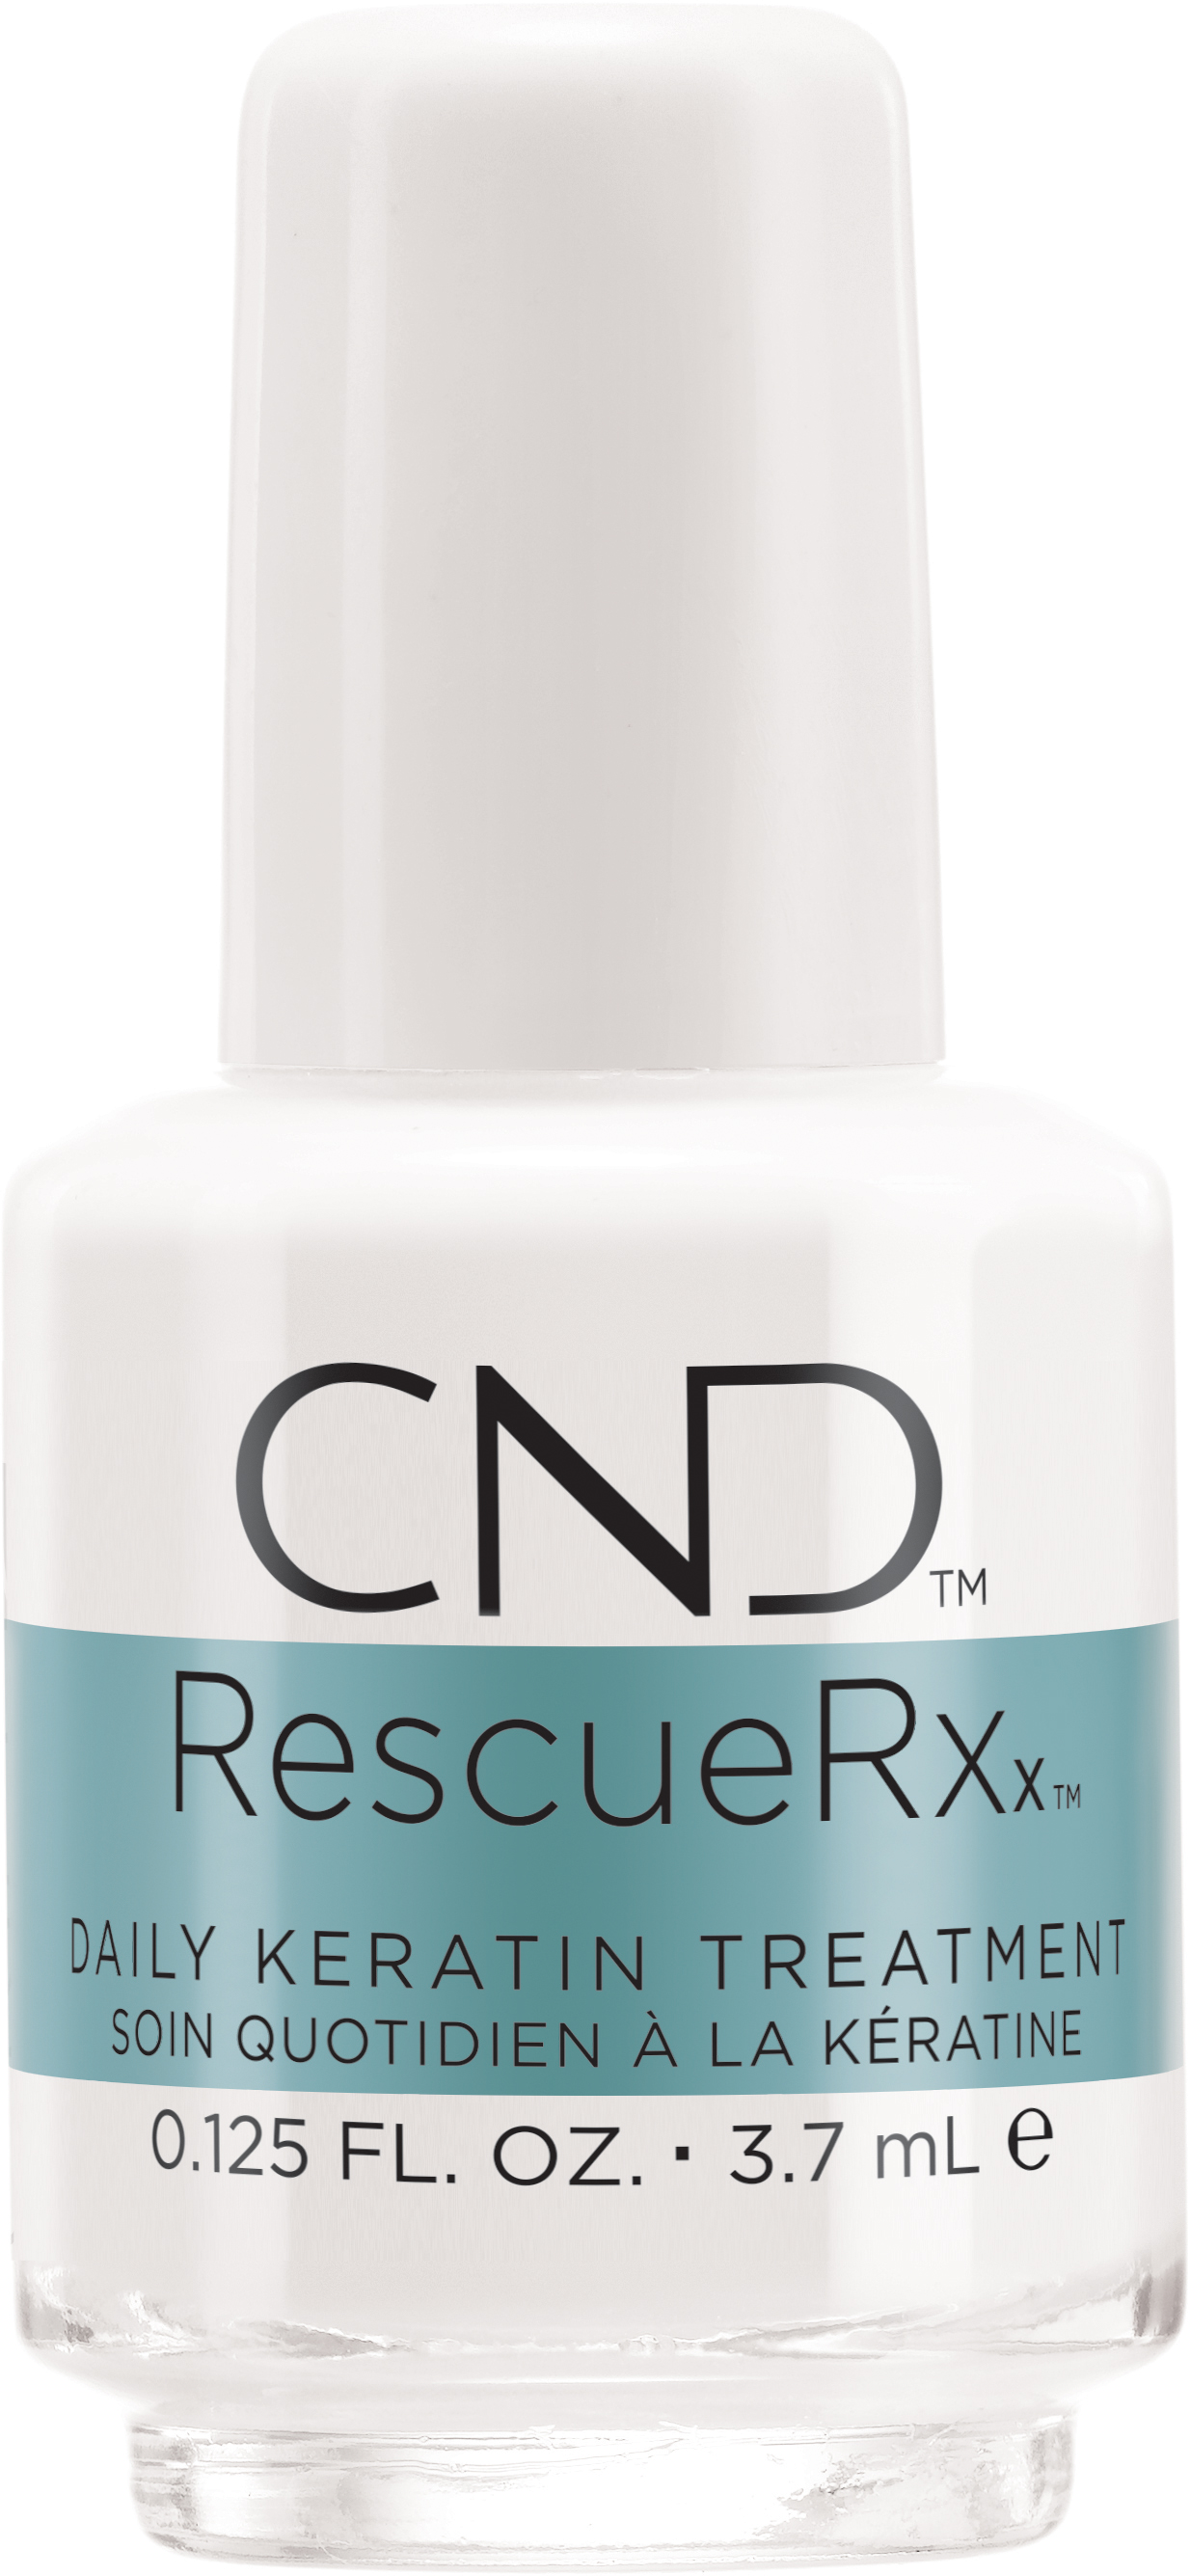 Se CND Rescue RXx Treatment 3.7 ml. hos Well.dk